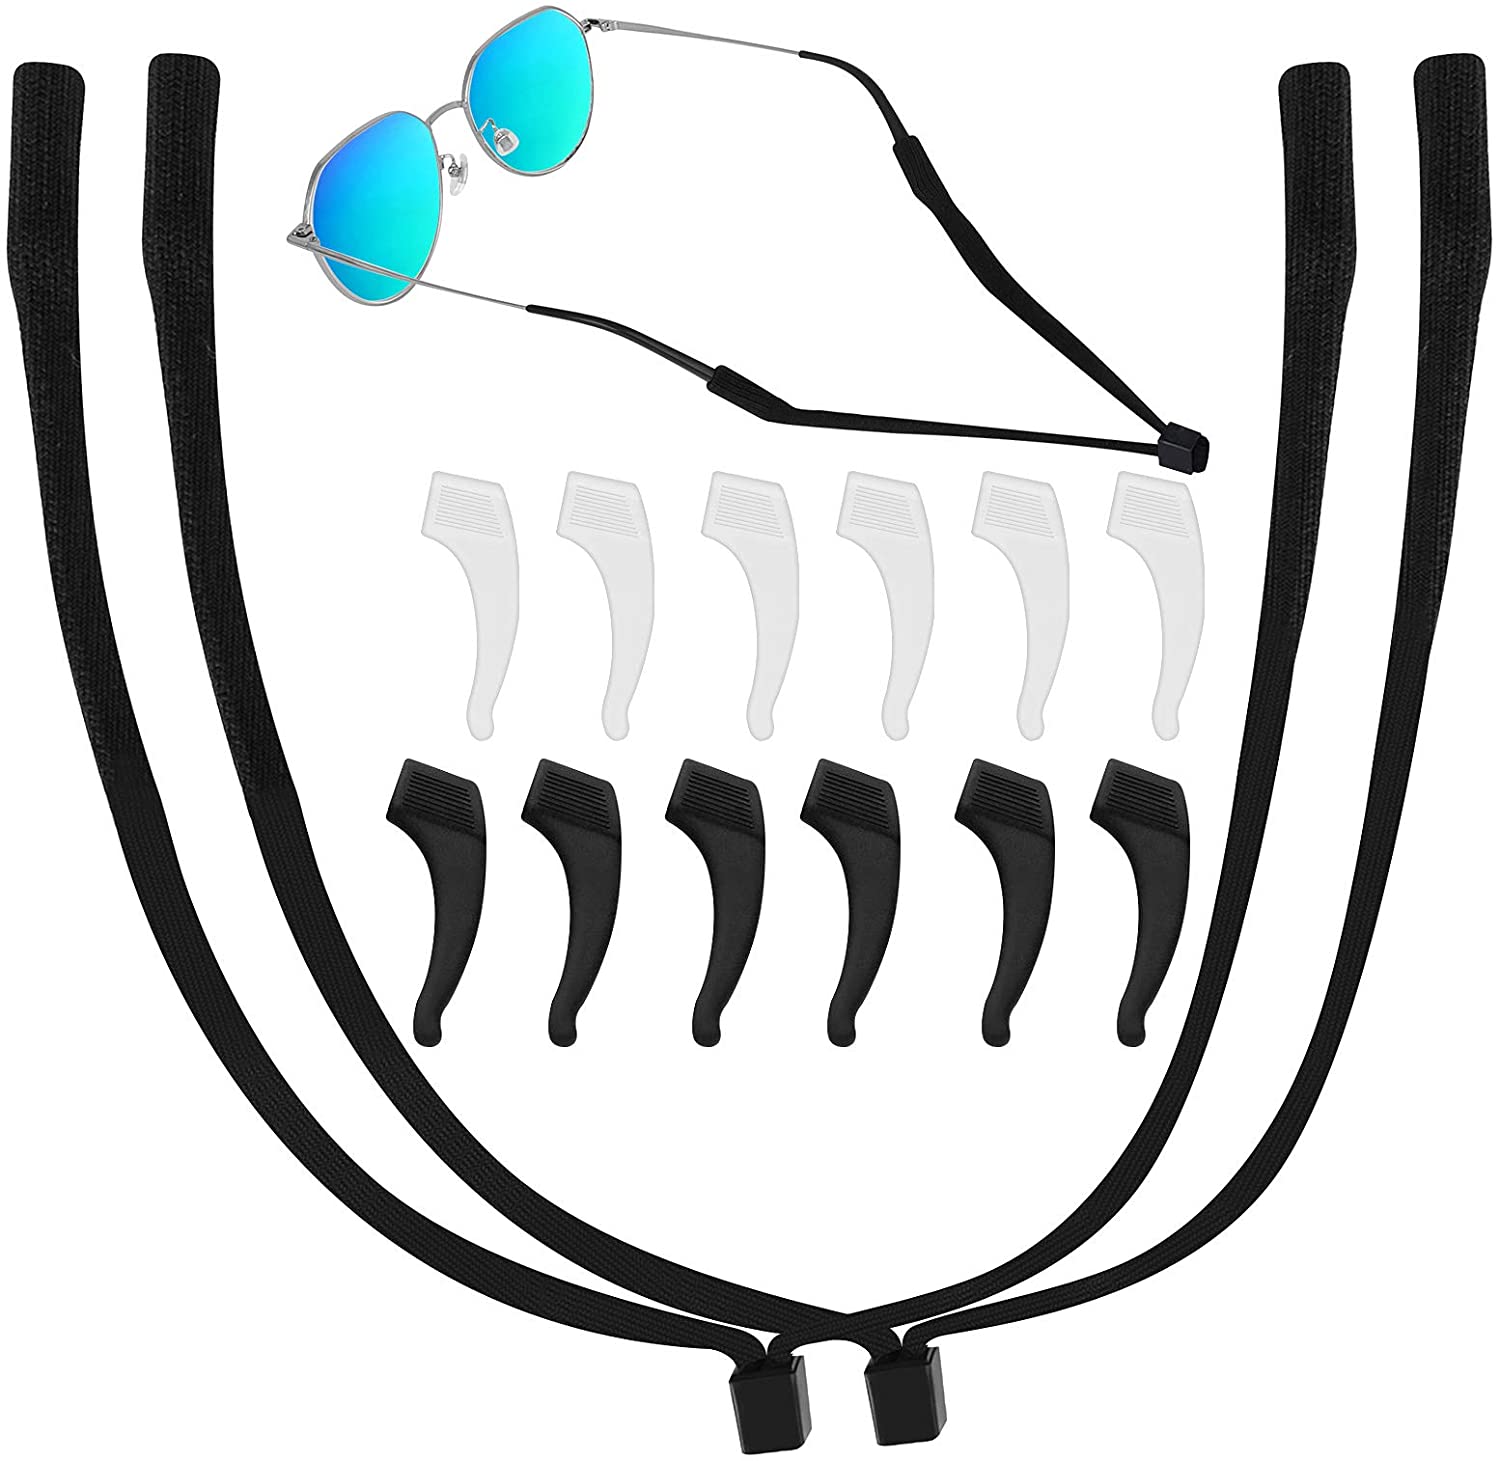 2 adjustable eyeglass straps + 12 ear hooks